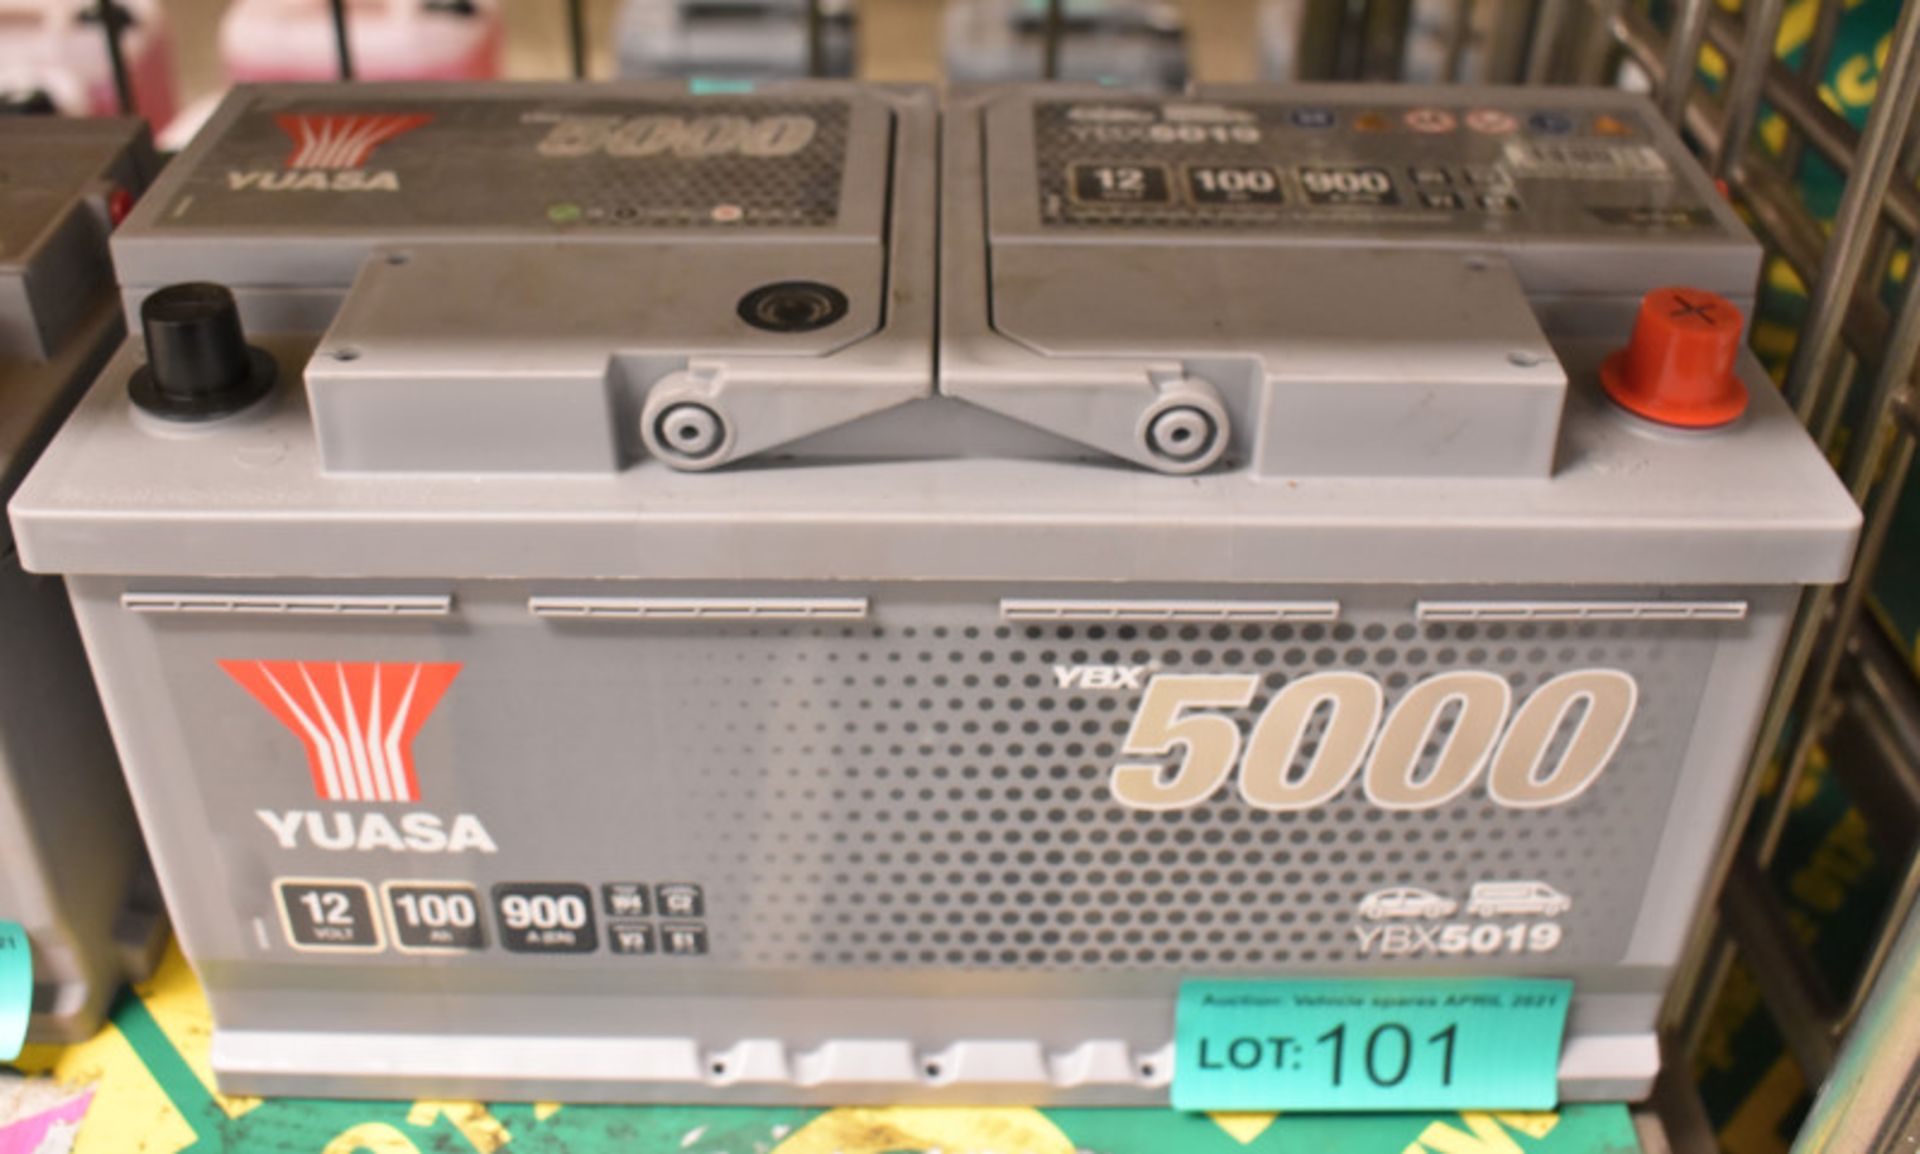 Yuasa YBX5019 12v 100Ah 900A Battery